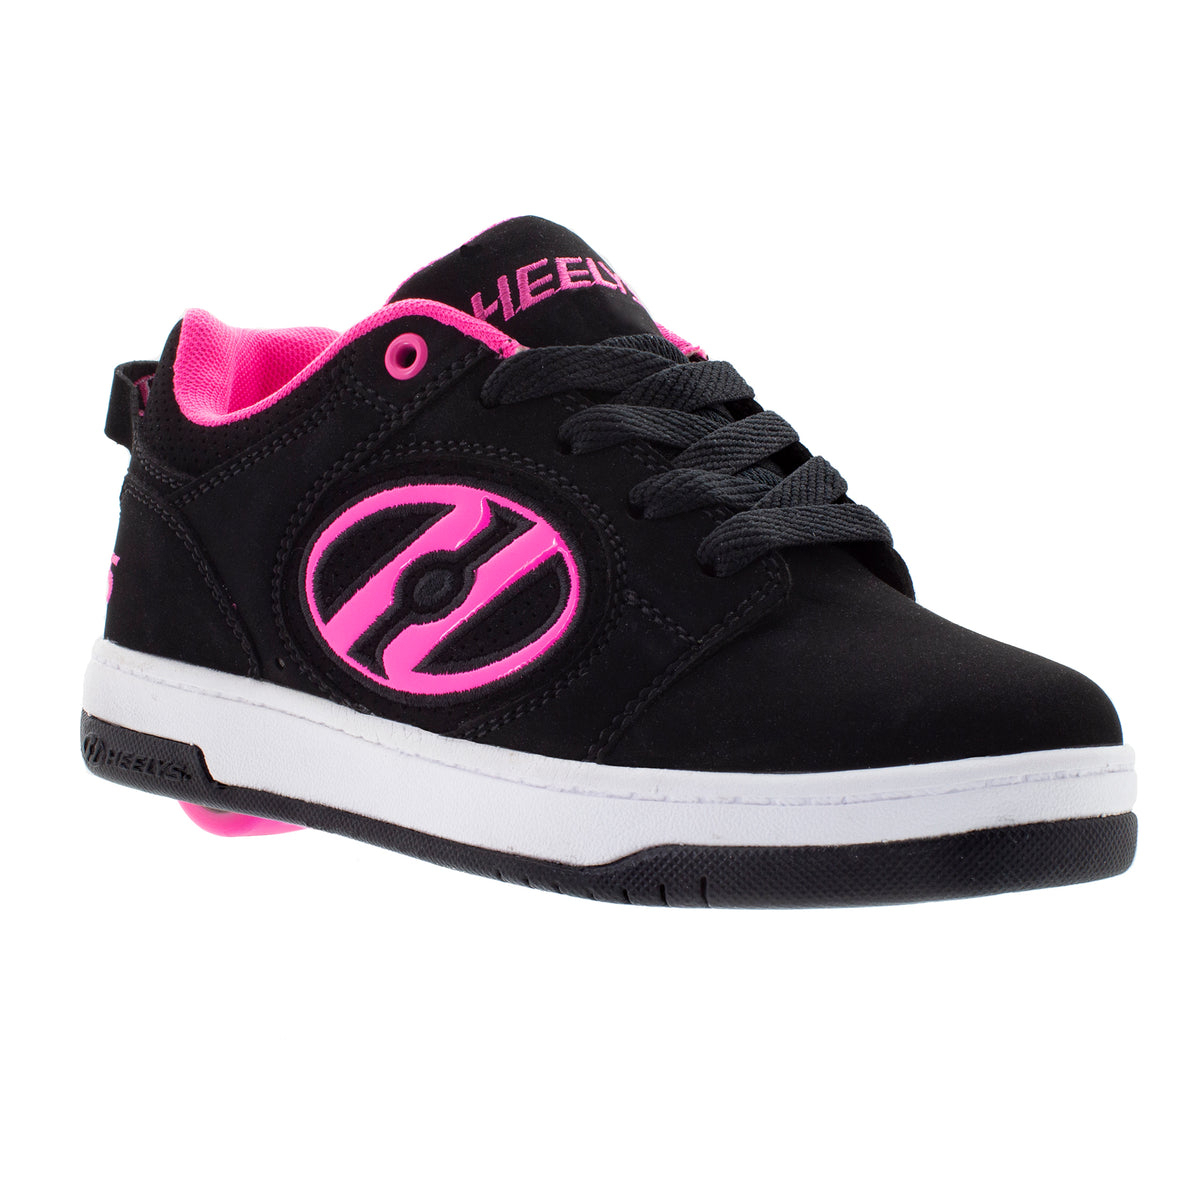 HEELYS Unisex Kids' Voyager Wheeled Shoe Black/Pink - HE100714H BLACK/PINK - BLACK/PINK, 6